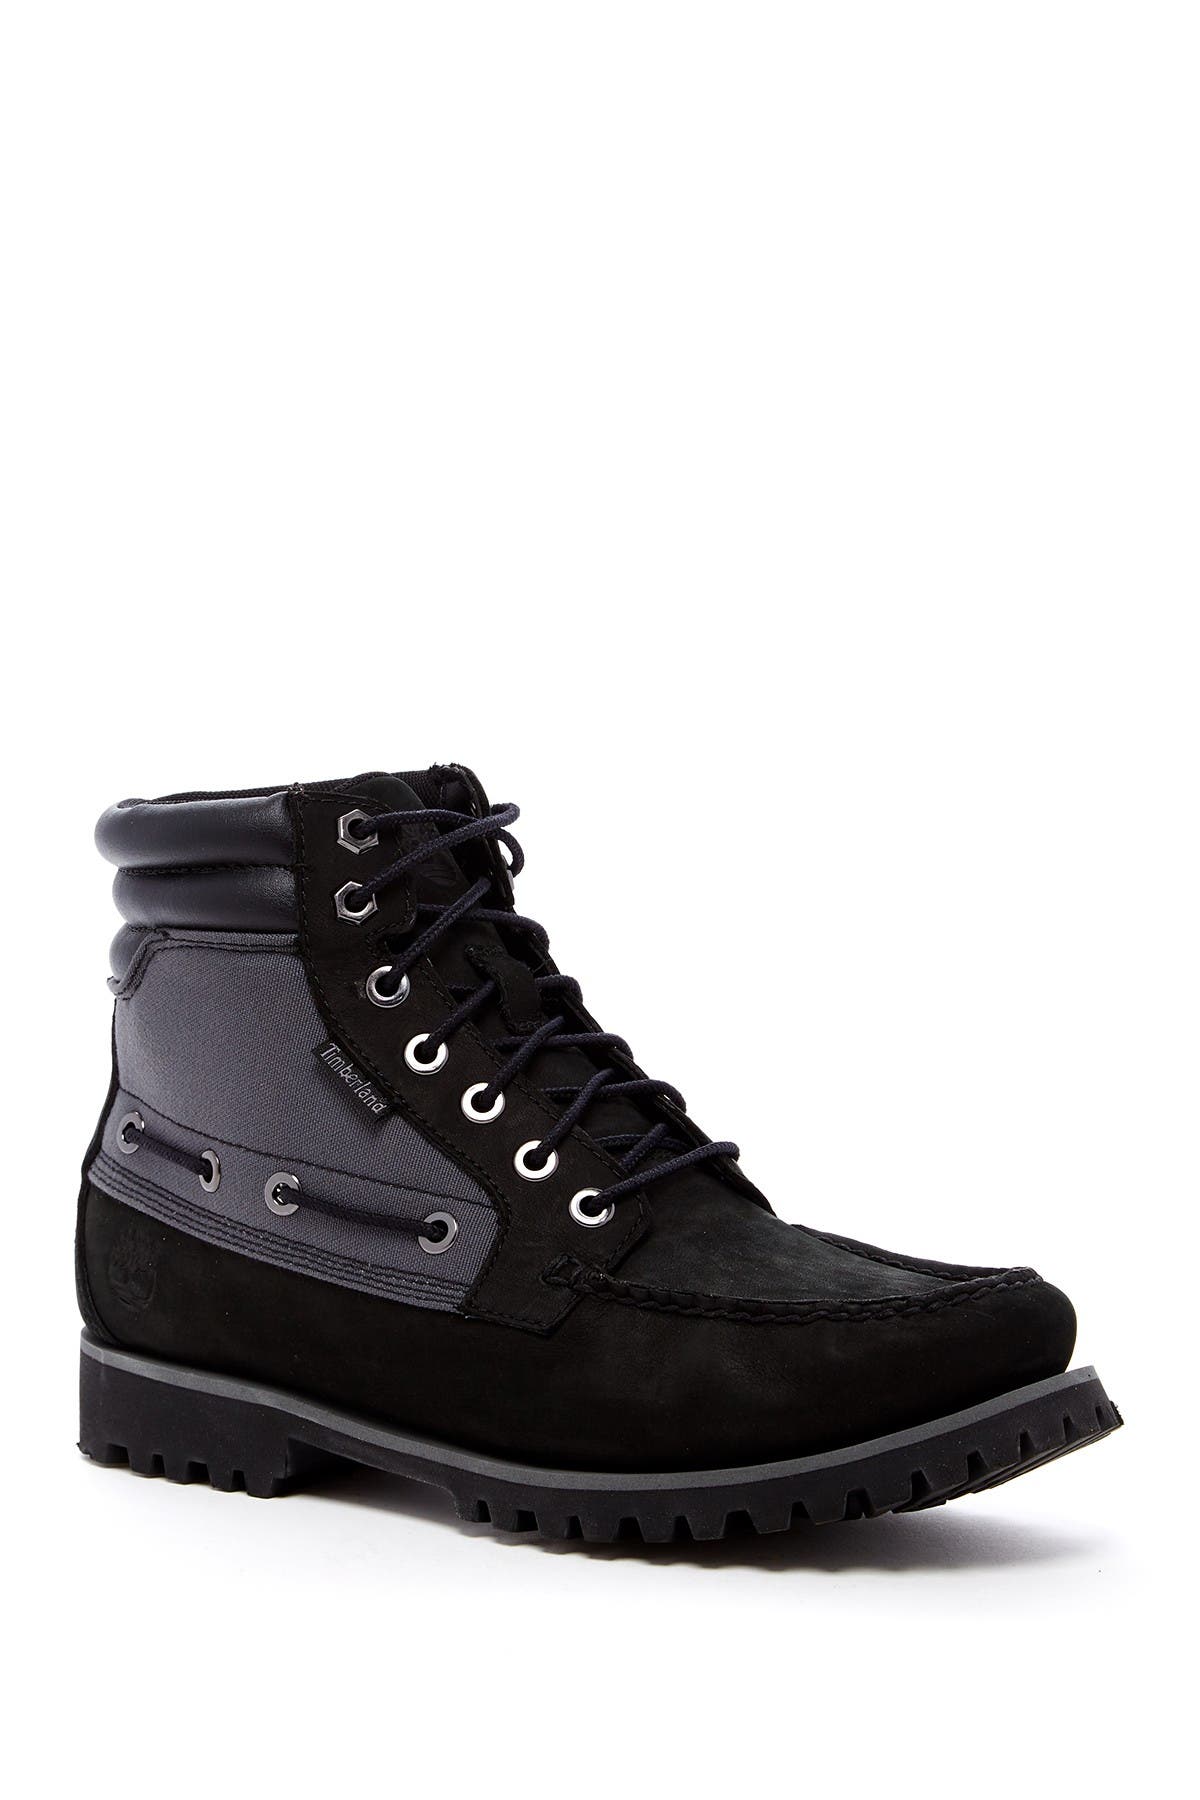 timberland oakwell boots black